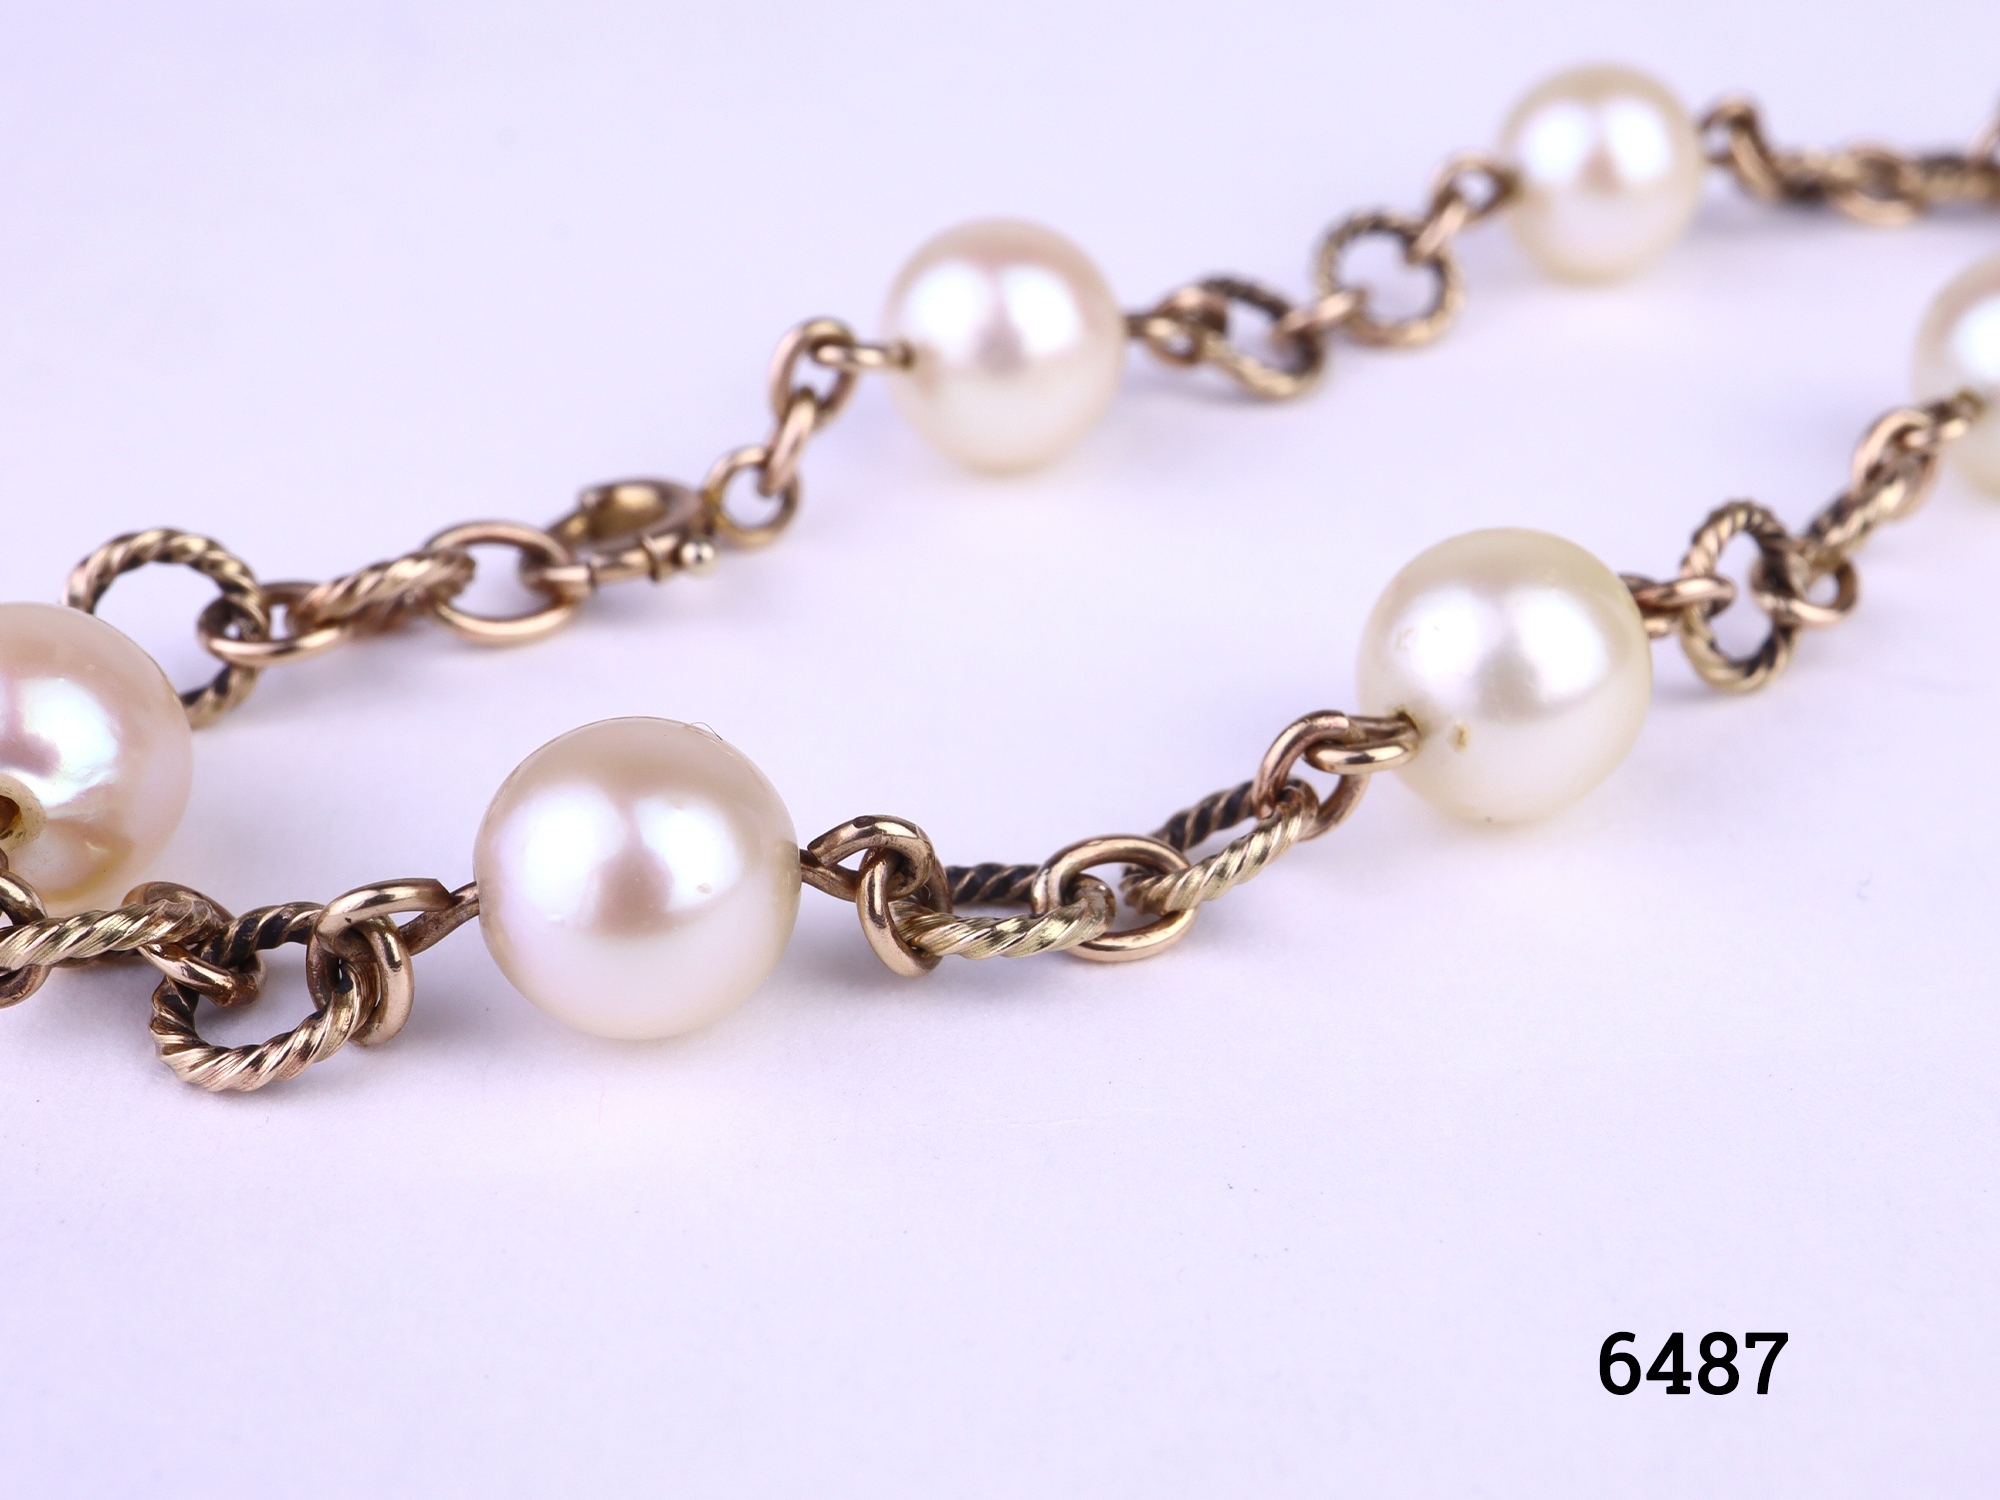 High Quality Fine Jewelry 24K Gold Plated Bracelets - Etsy